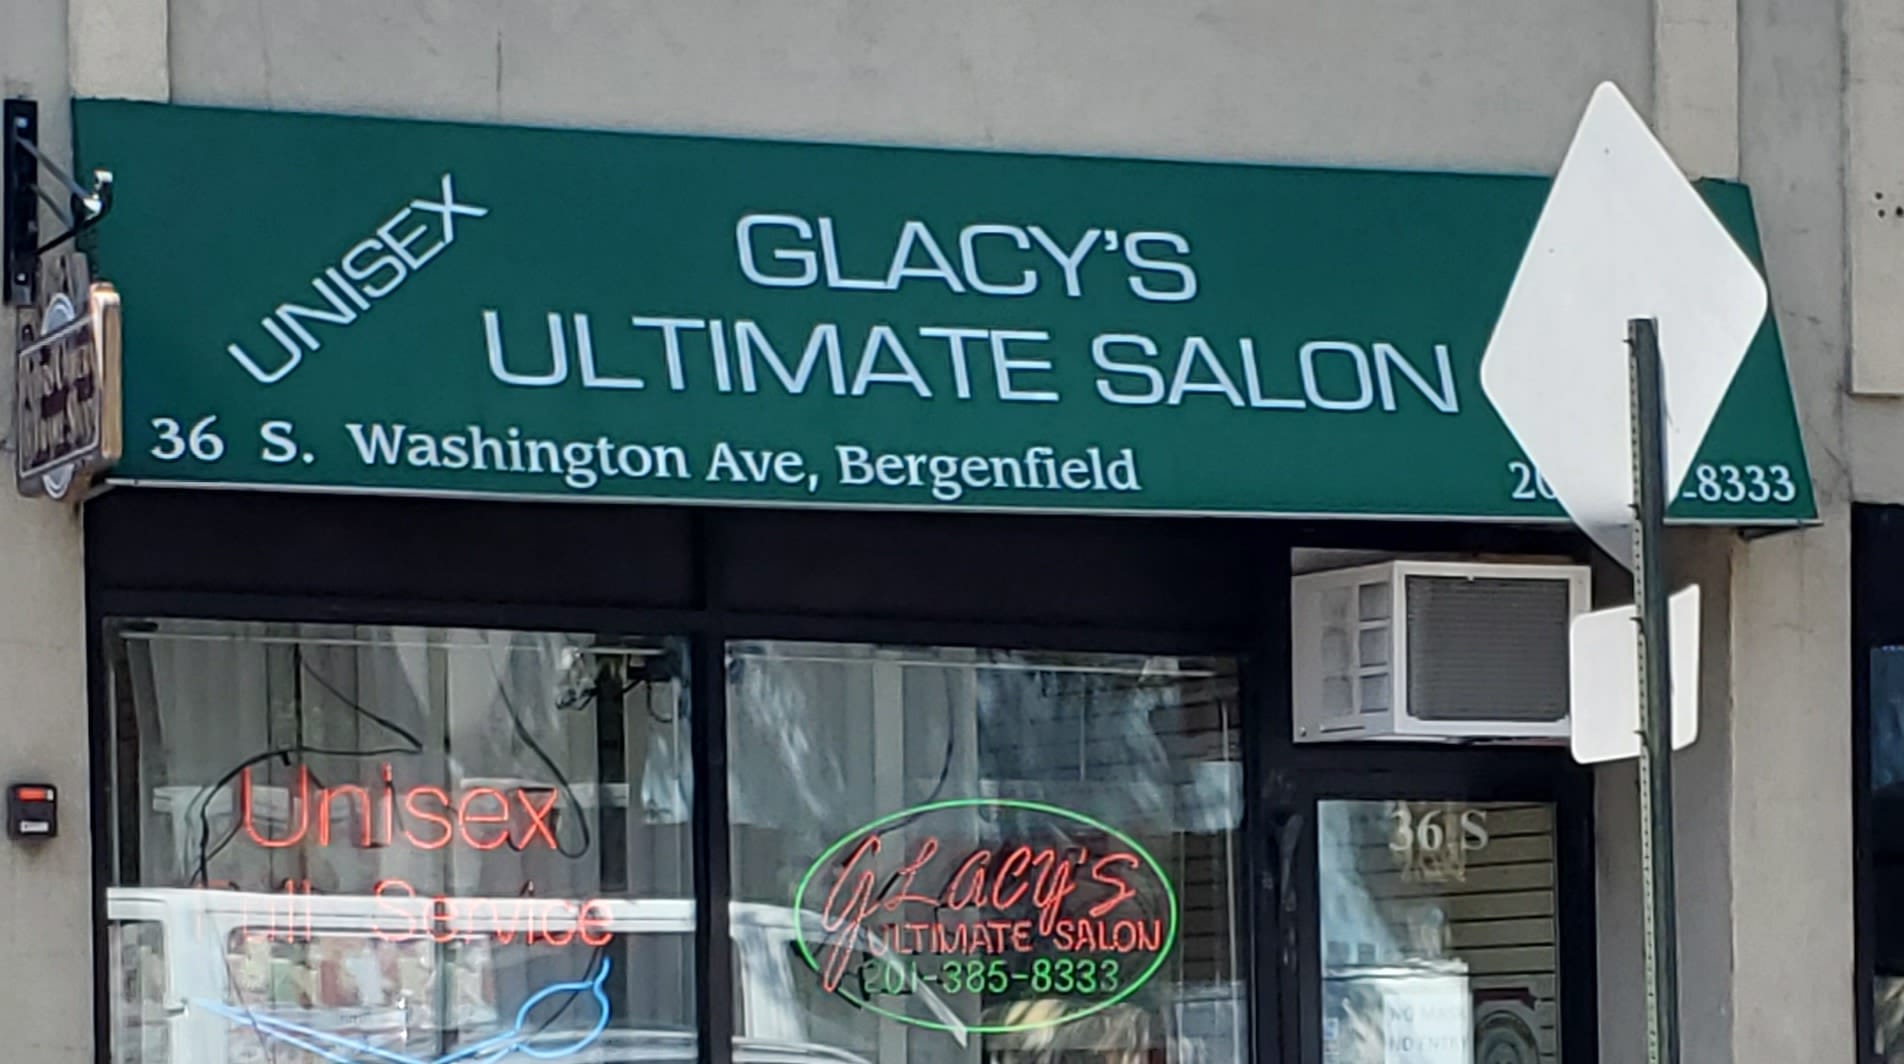 Glacy's Ultimate Salon